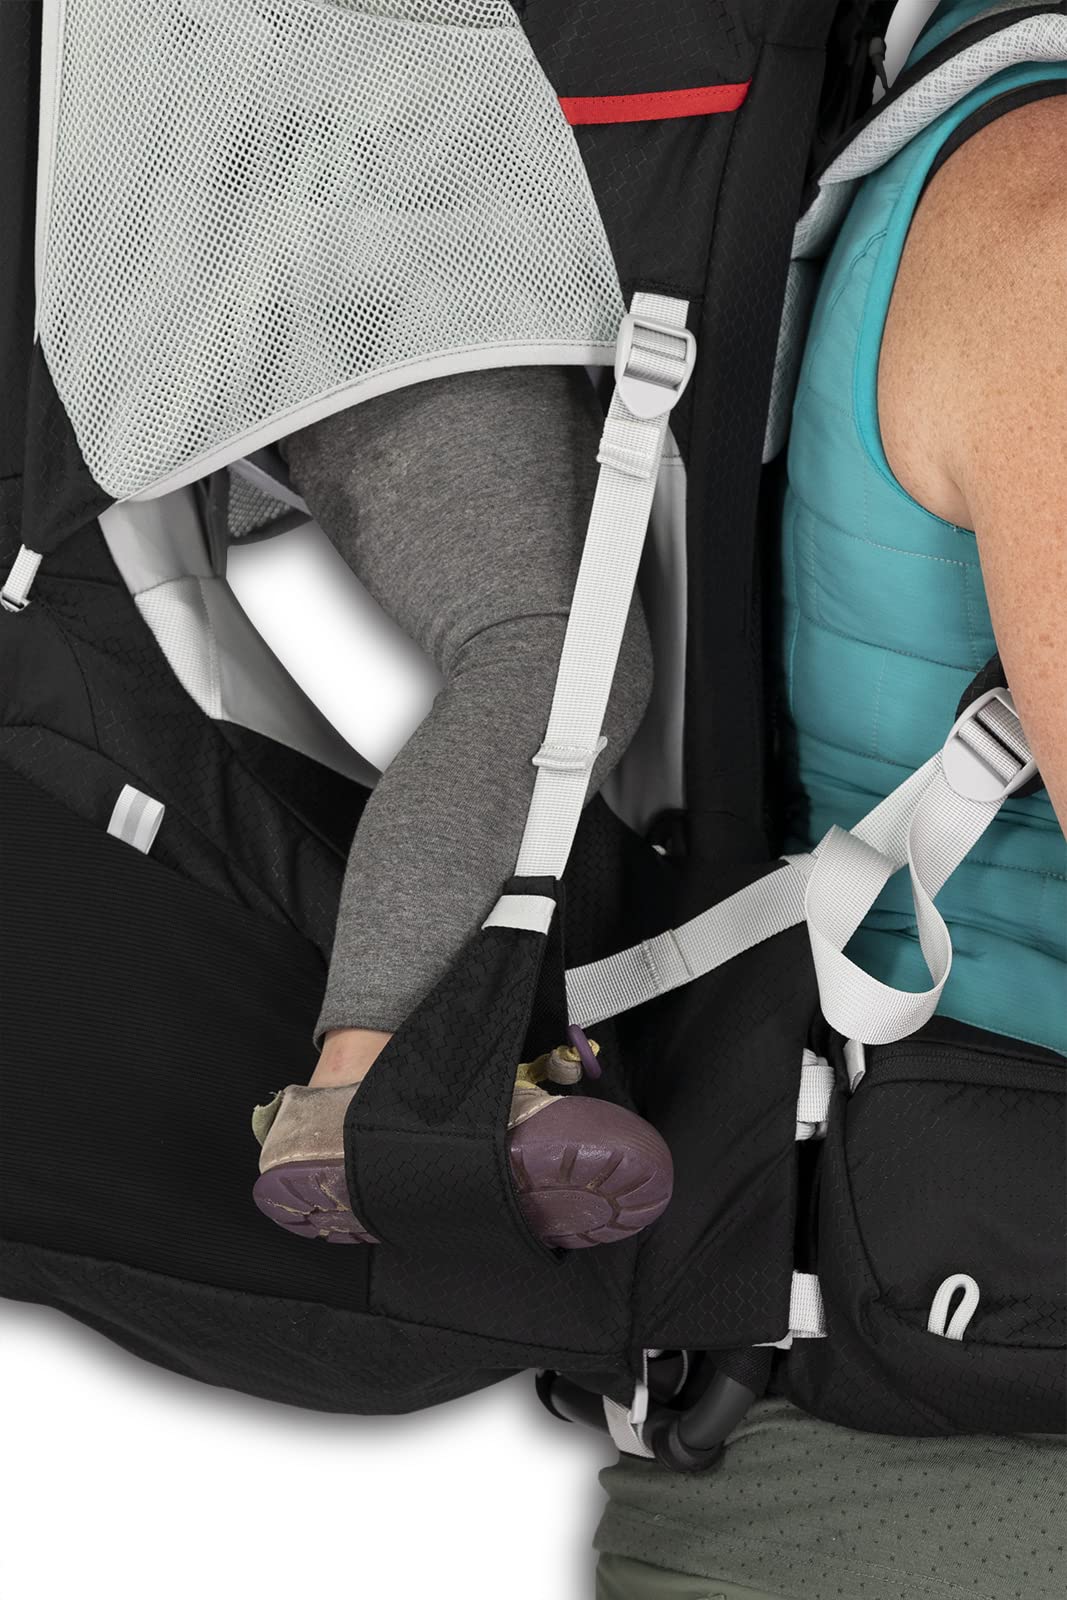 Osprey Poco Plus Child Carrier Backpack, Starry Black